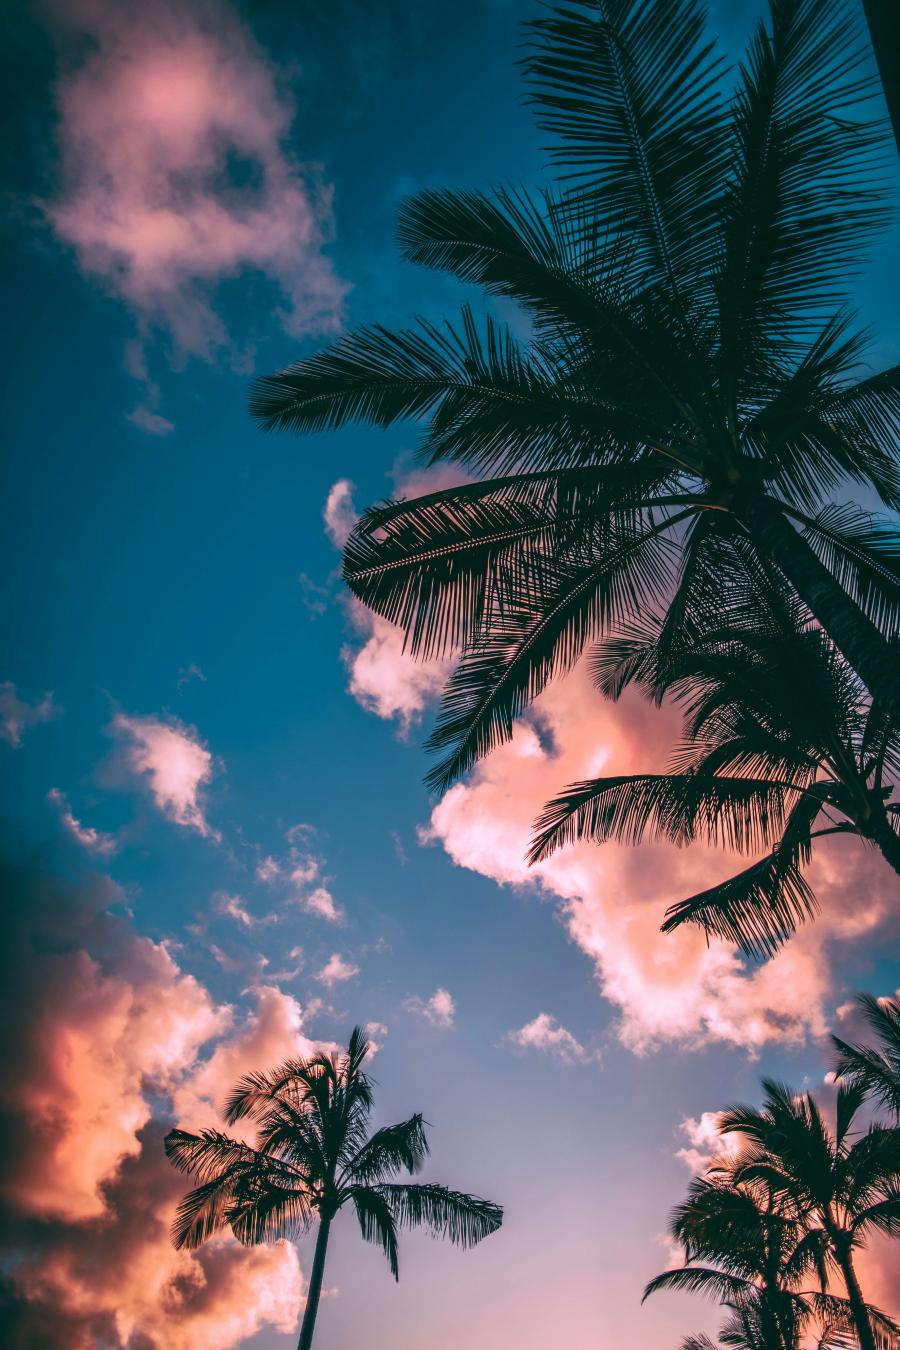 mørke palmeblade mod en blå/lilla/rød himmel og skyer